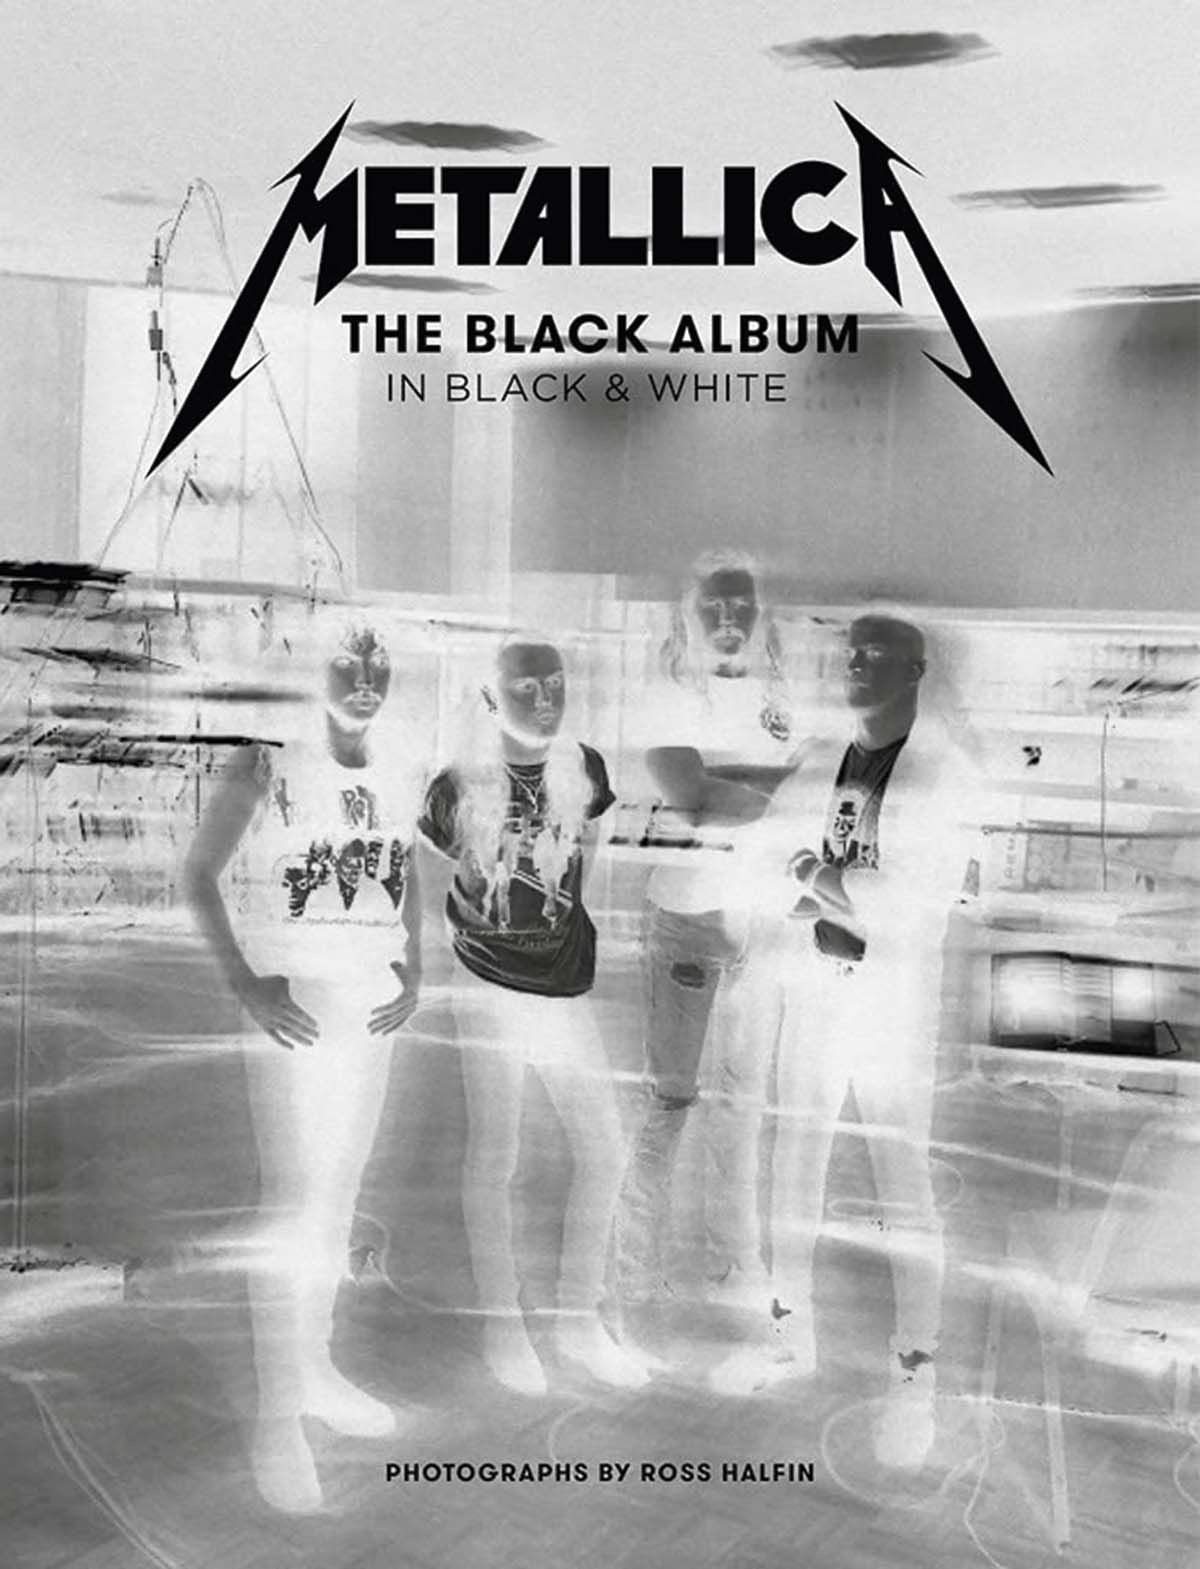 Metallica - Metallica: The Black Album in Black & White